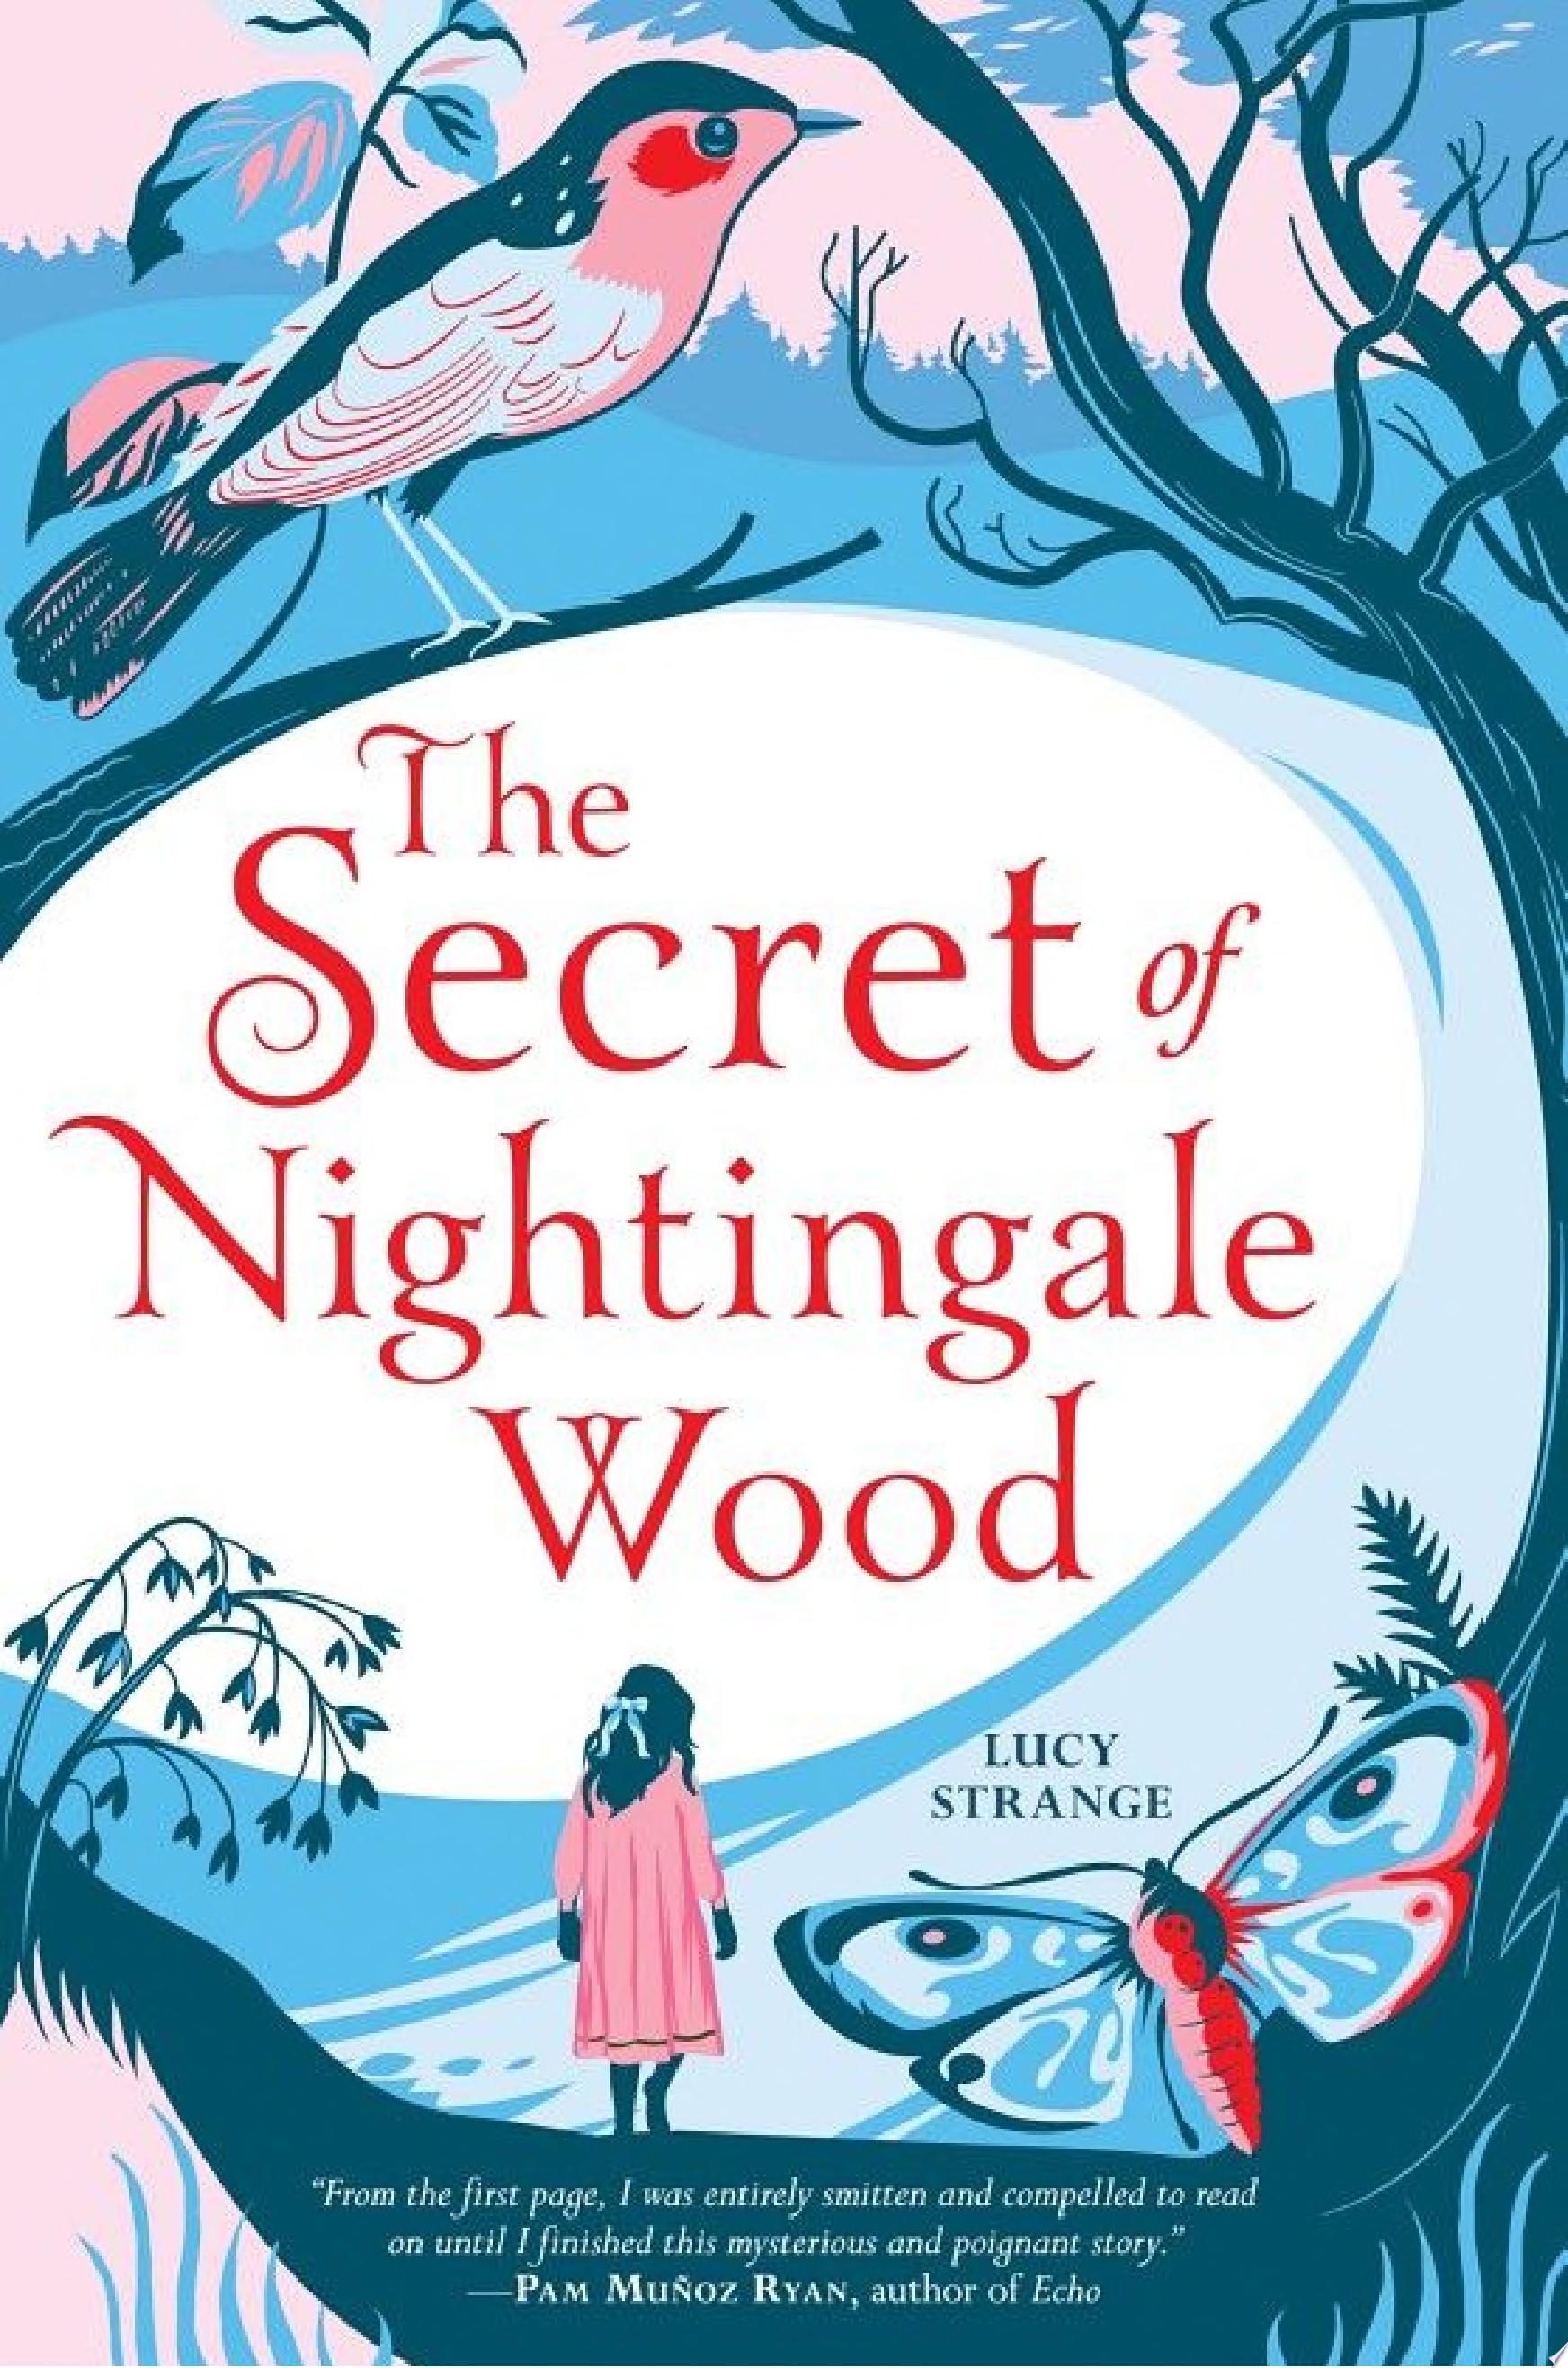 Image for "The Secret of Nightingale Wood"